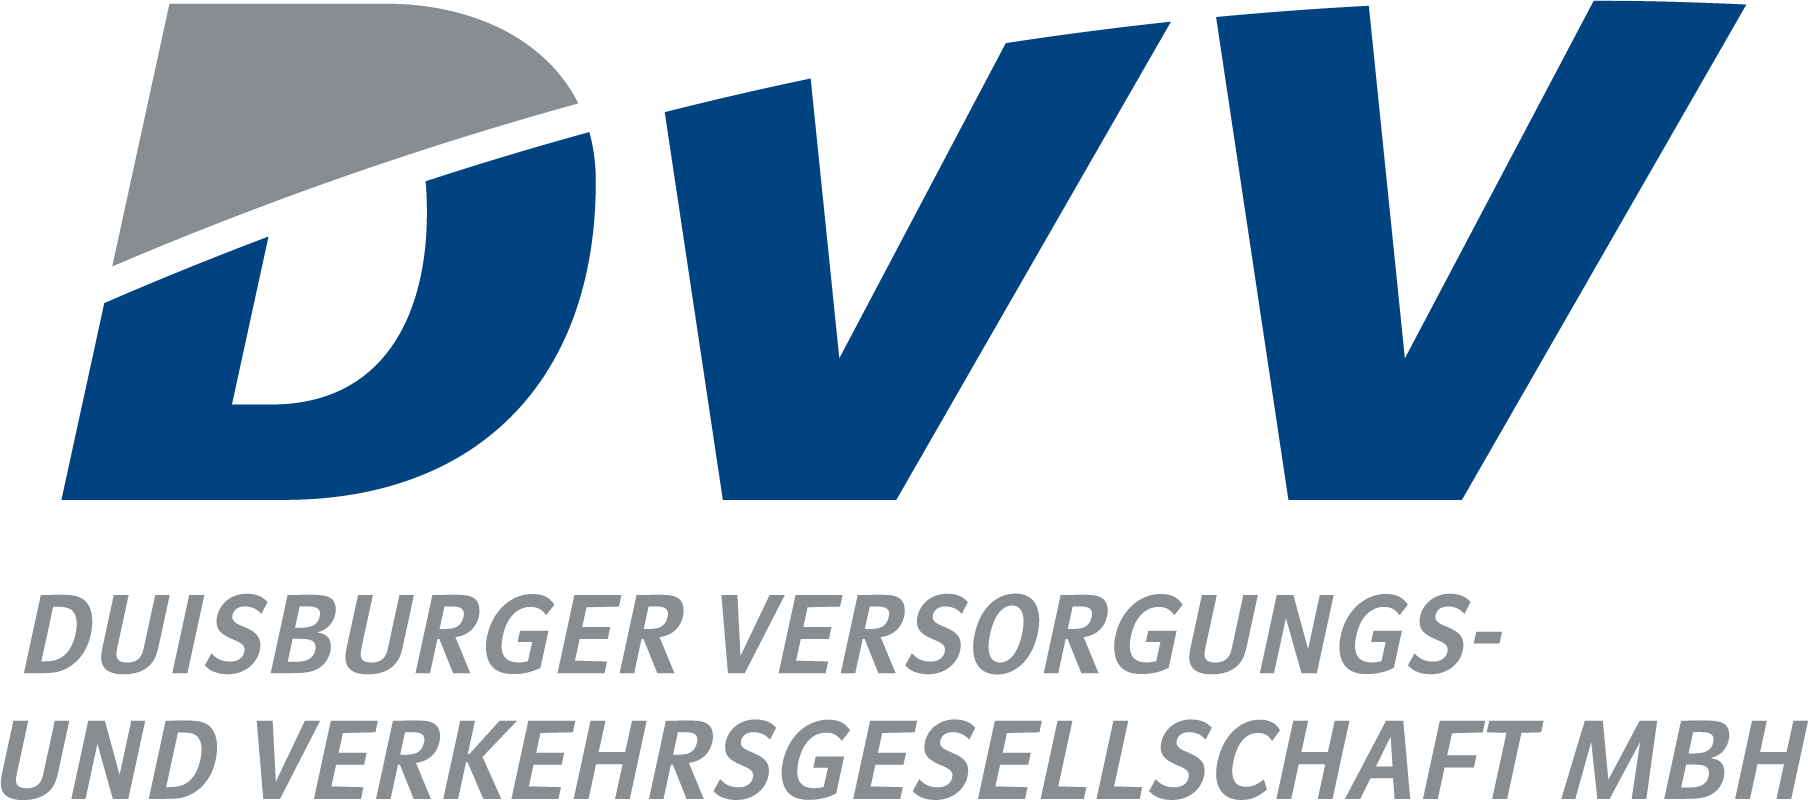 DVV Duisburger Versorgungs- und Verkehrsgesellschaft MBH